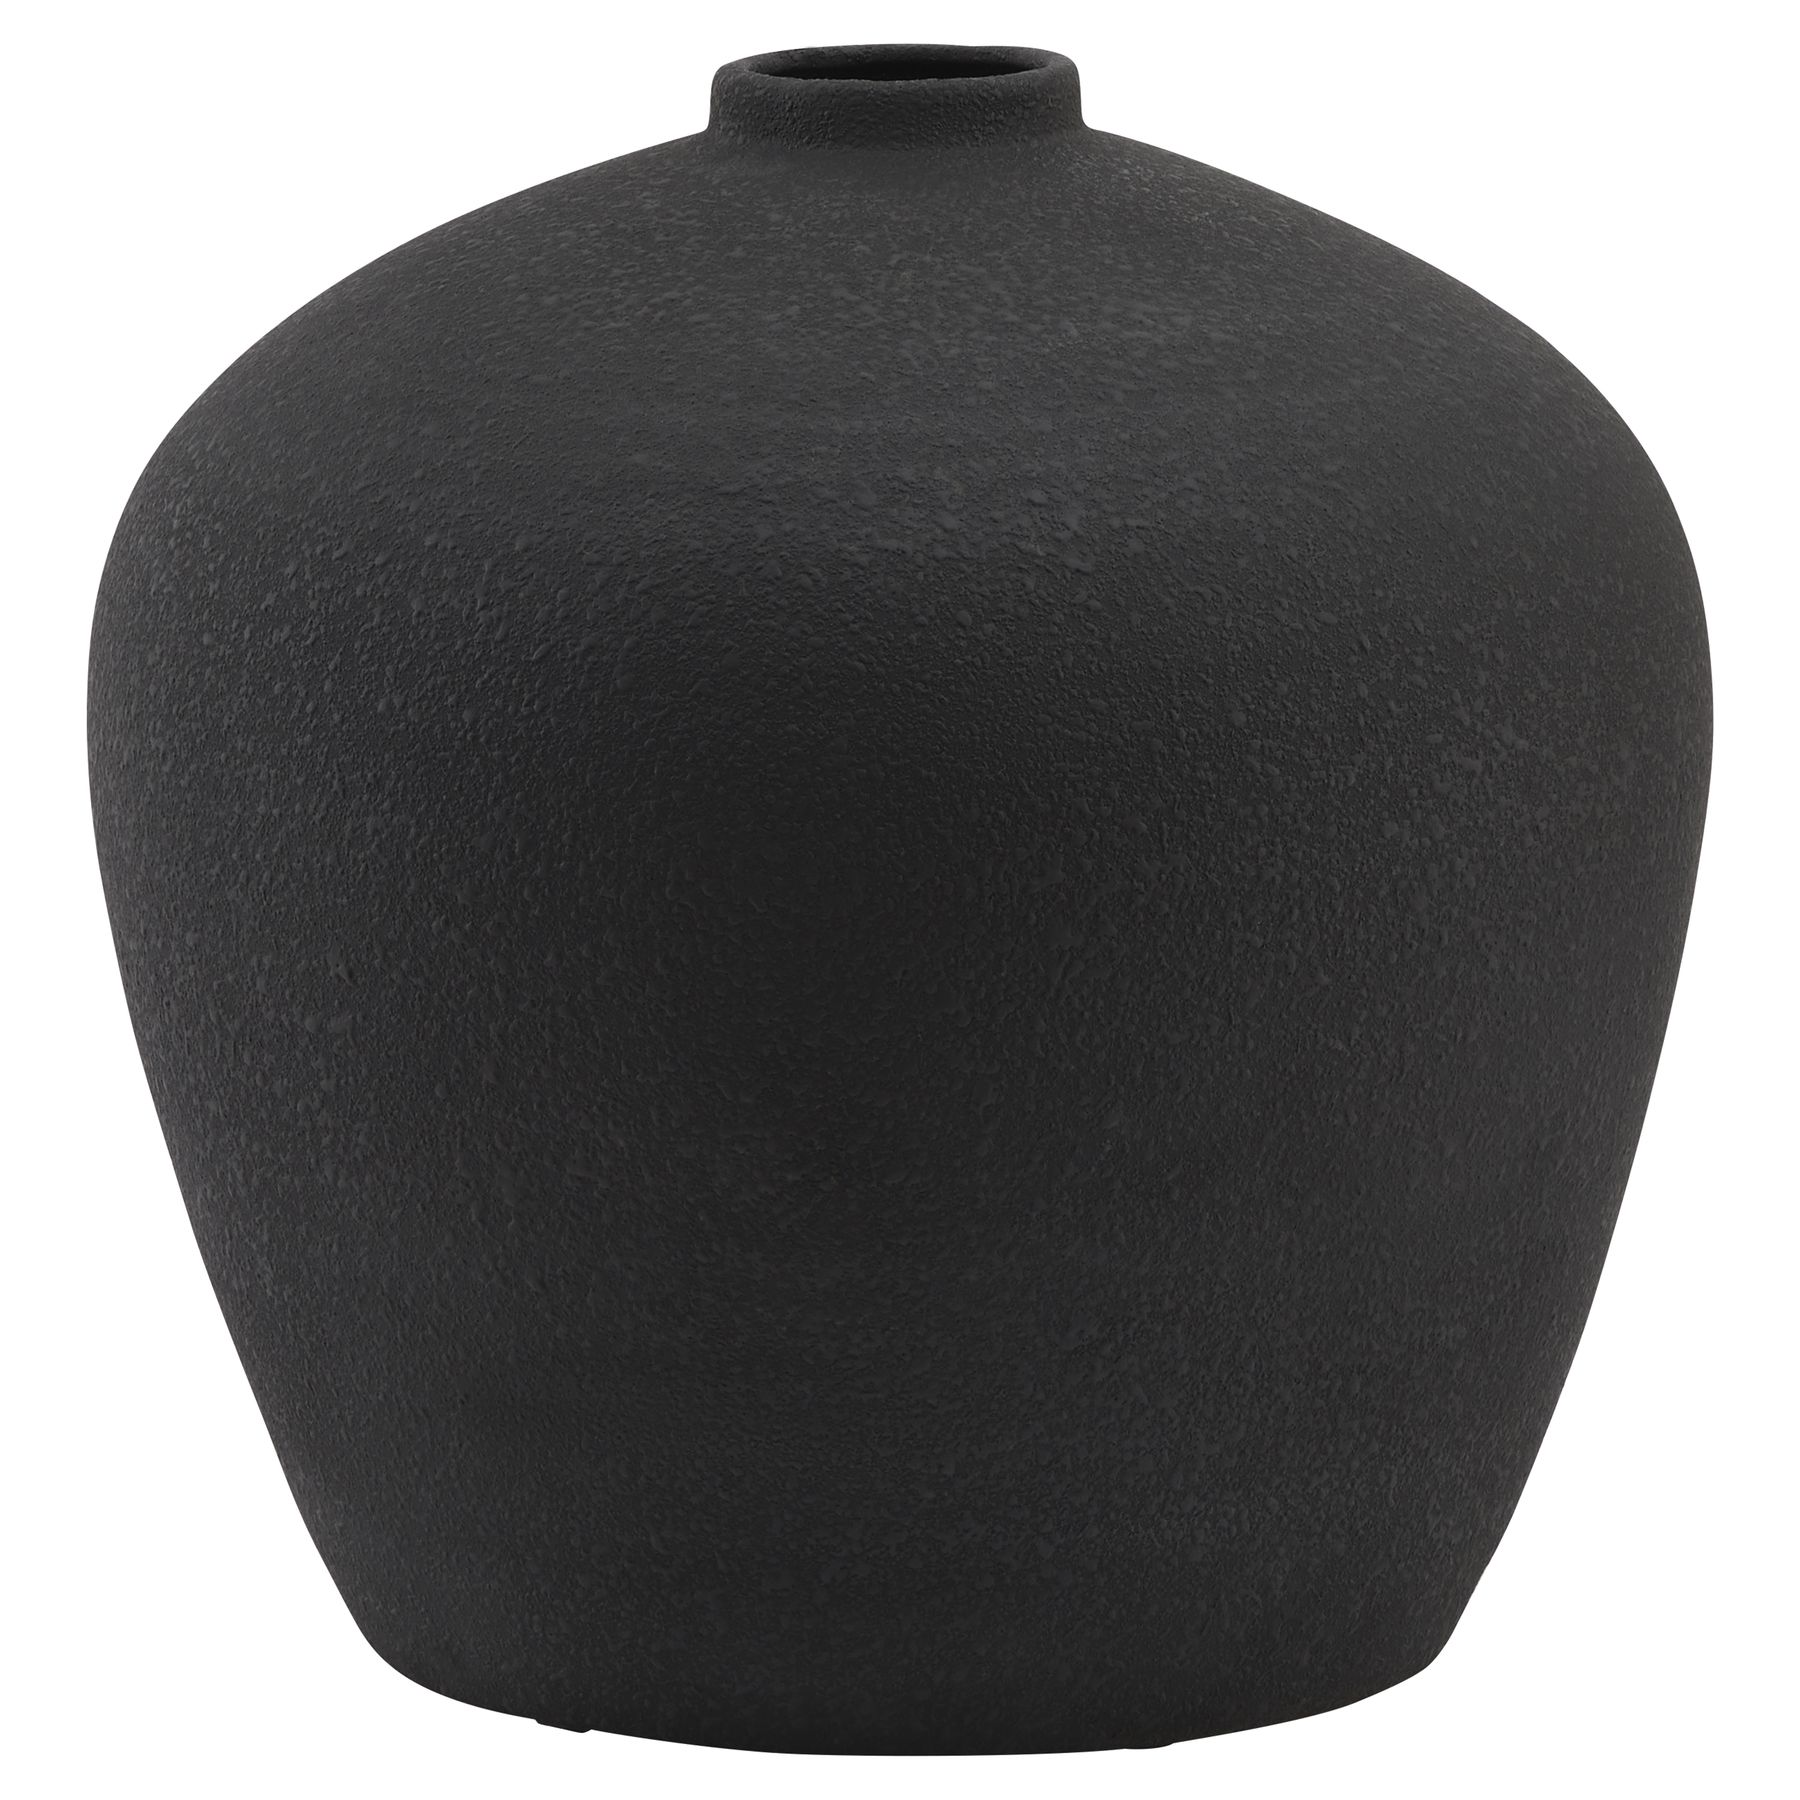 Matt Black Astral Vase - Image 1